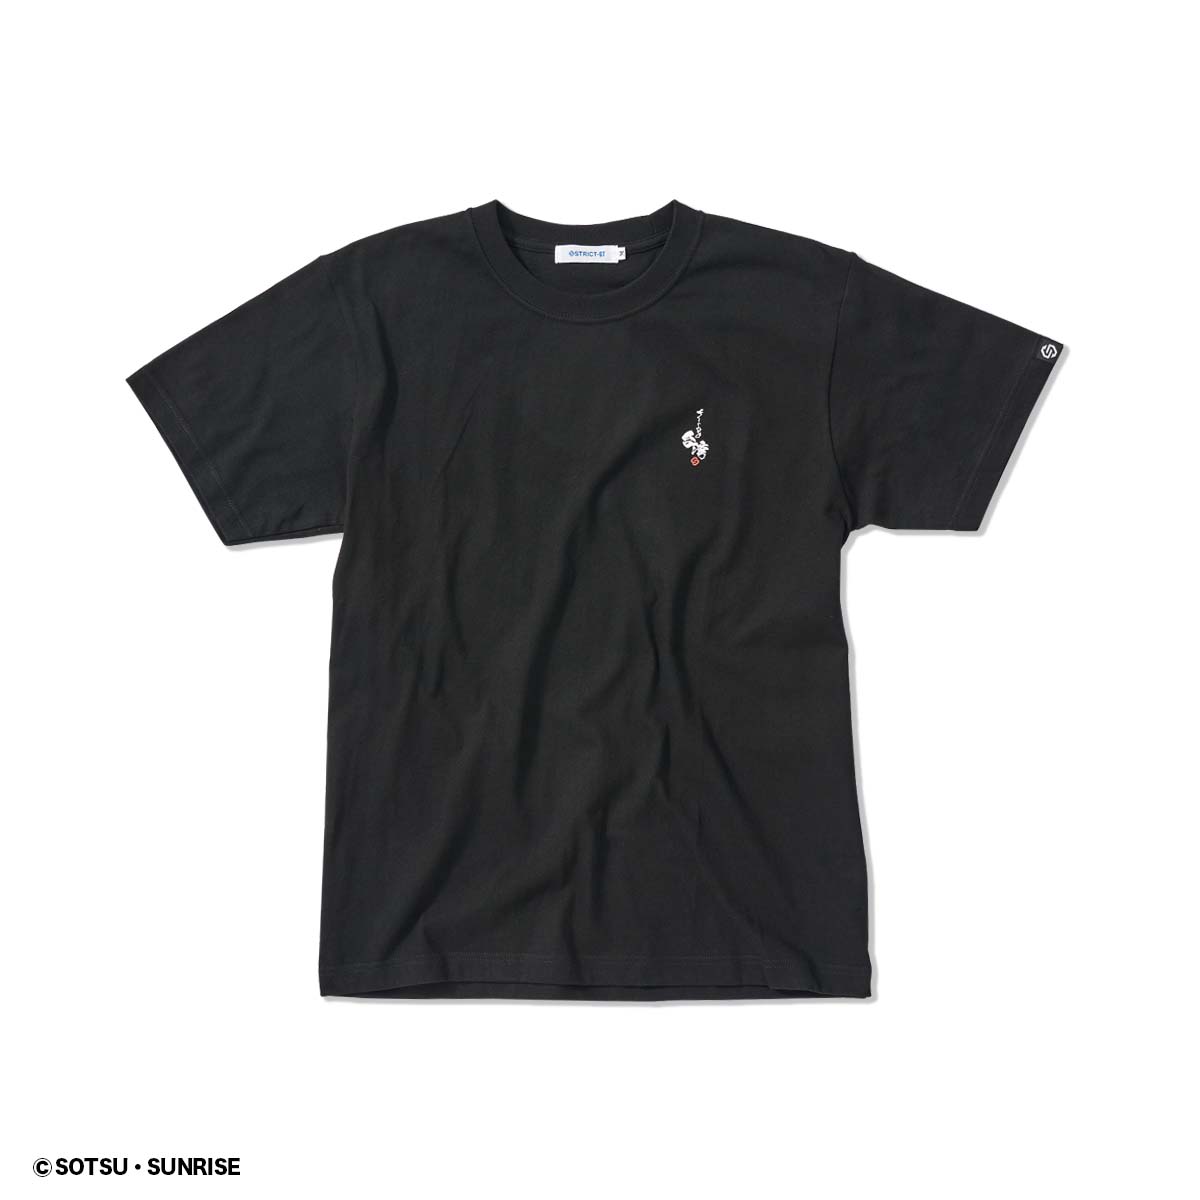 STRICT-G TAIWAN Original T-shirt Justice pattern black